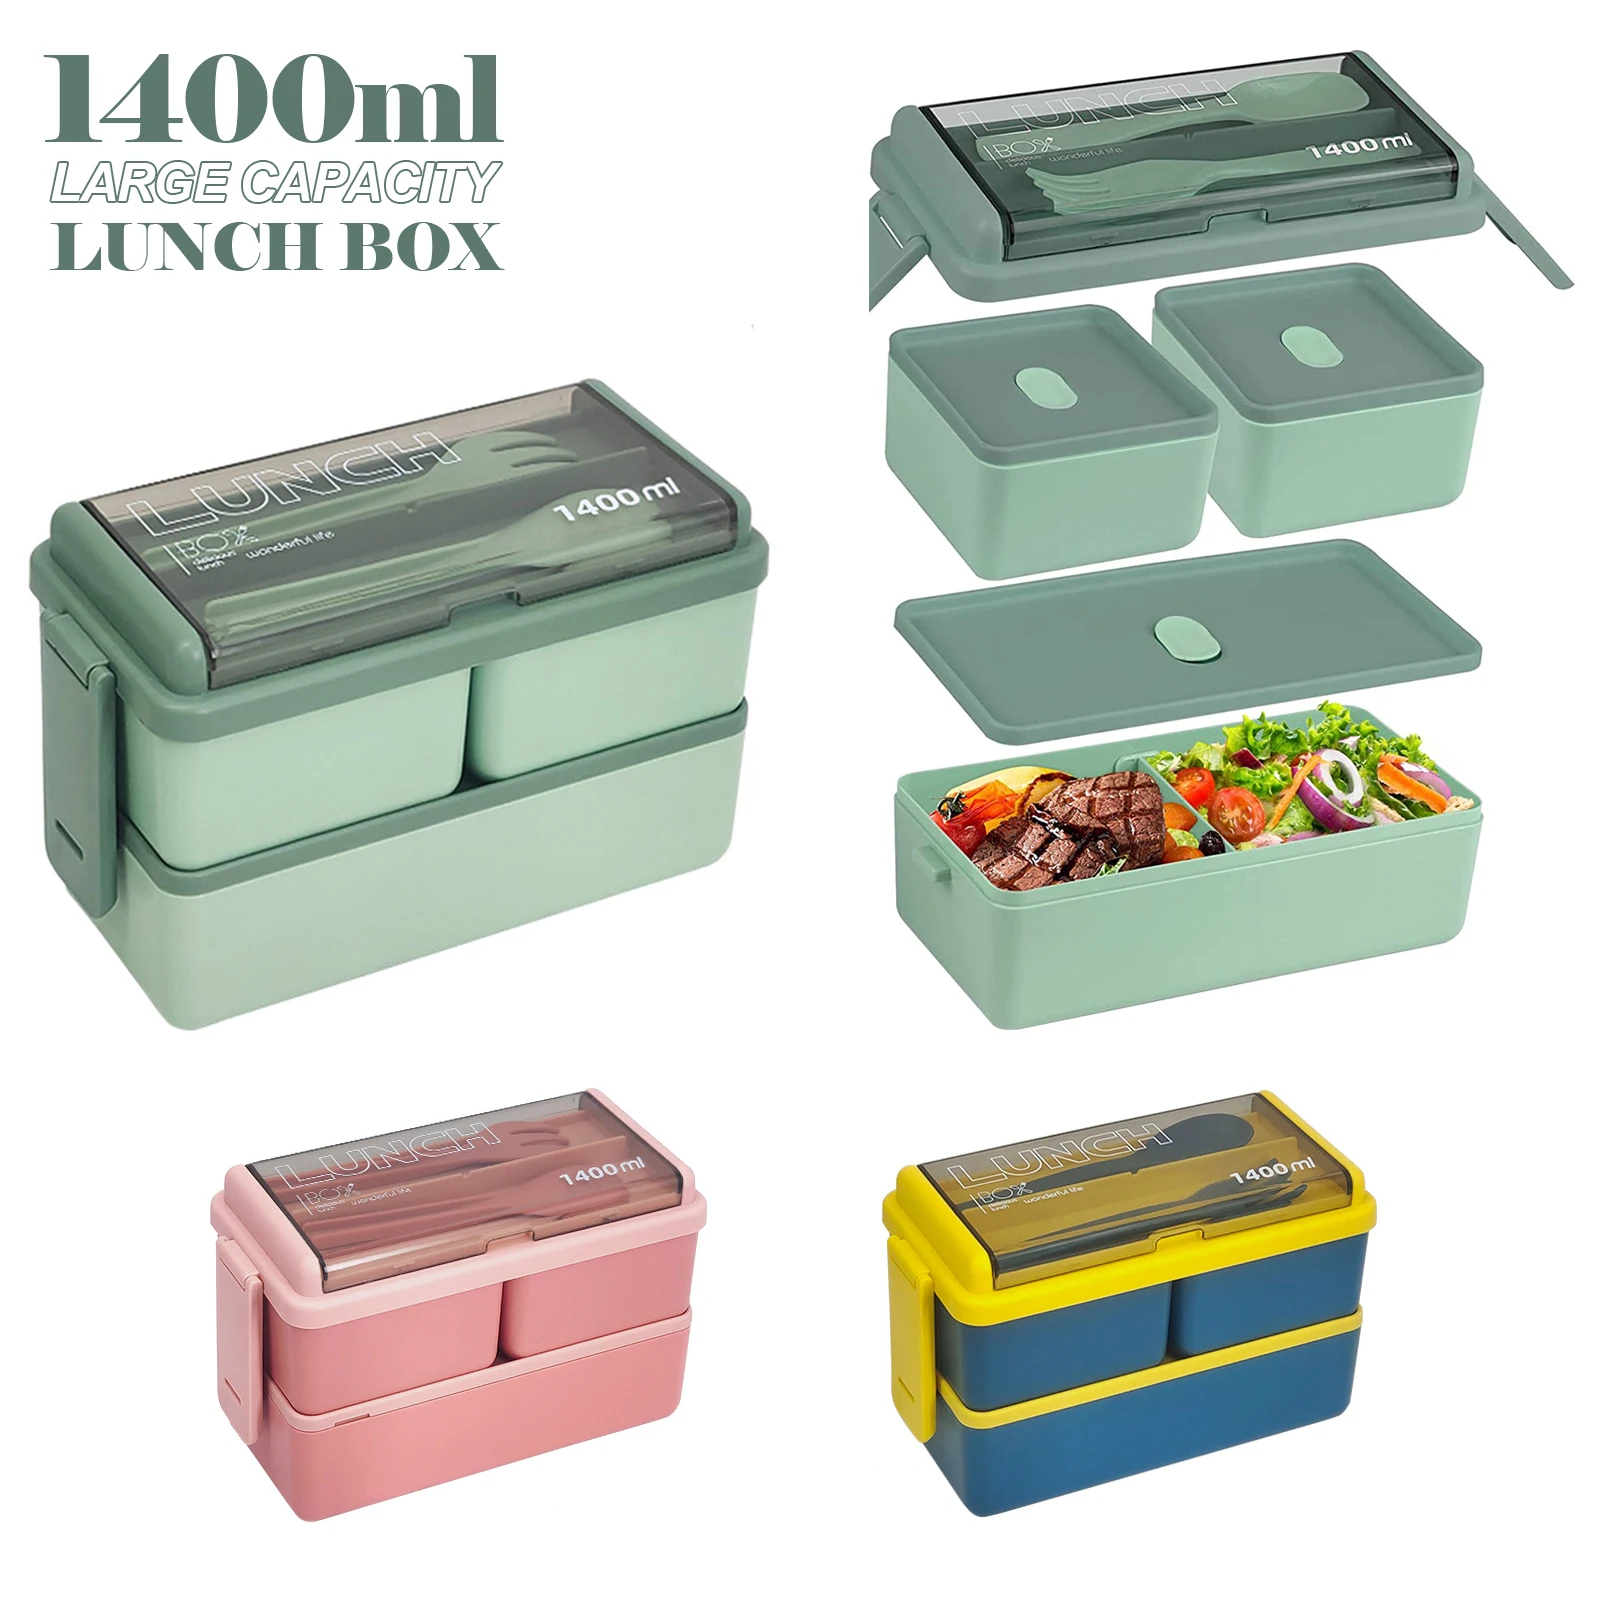 

Kitchen 1400ml Microwave Lunch Box Separate Dinnerware Food Storage Container Children Kids School Office Portable Bento Box